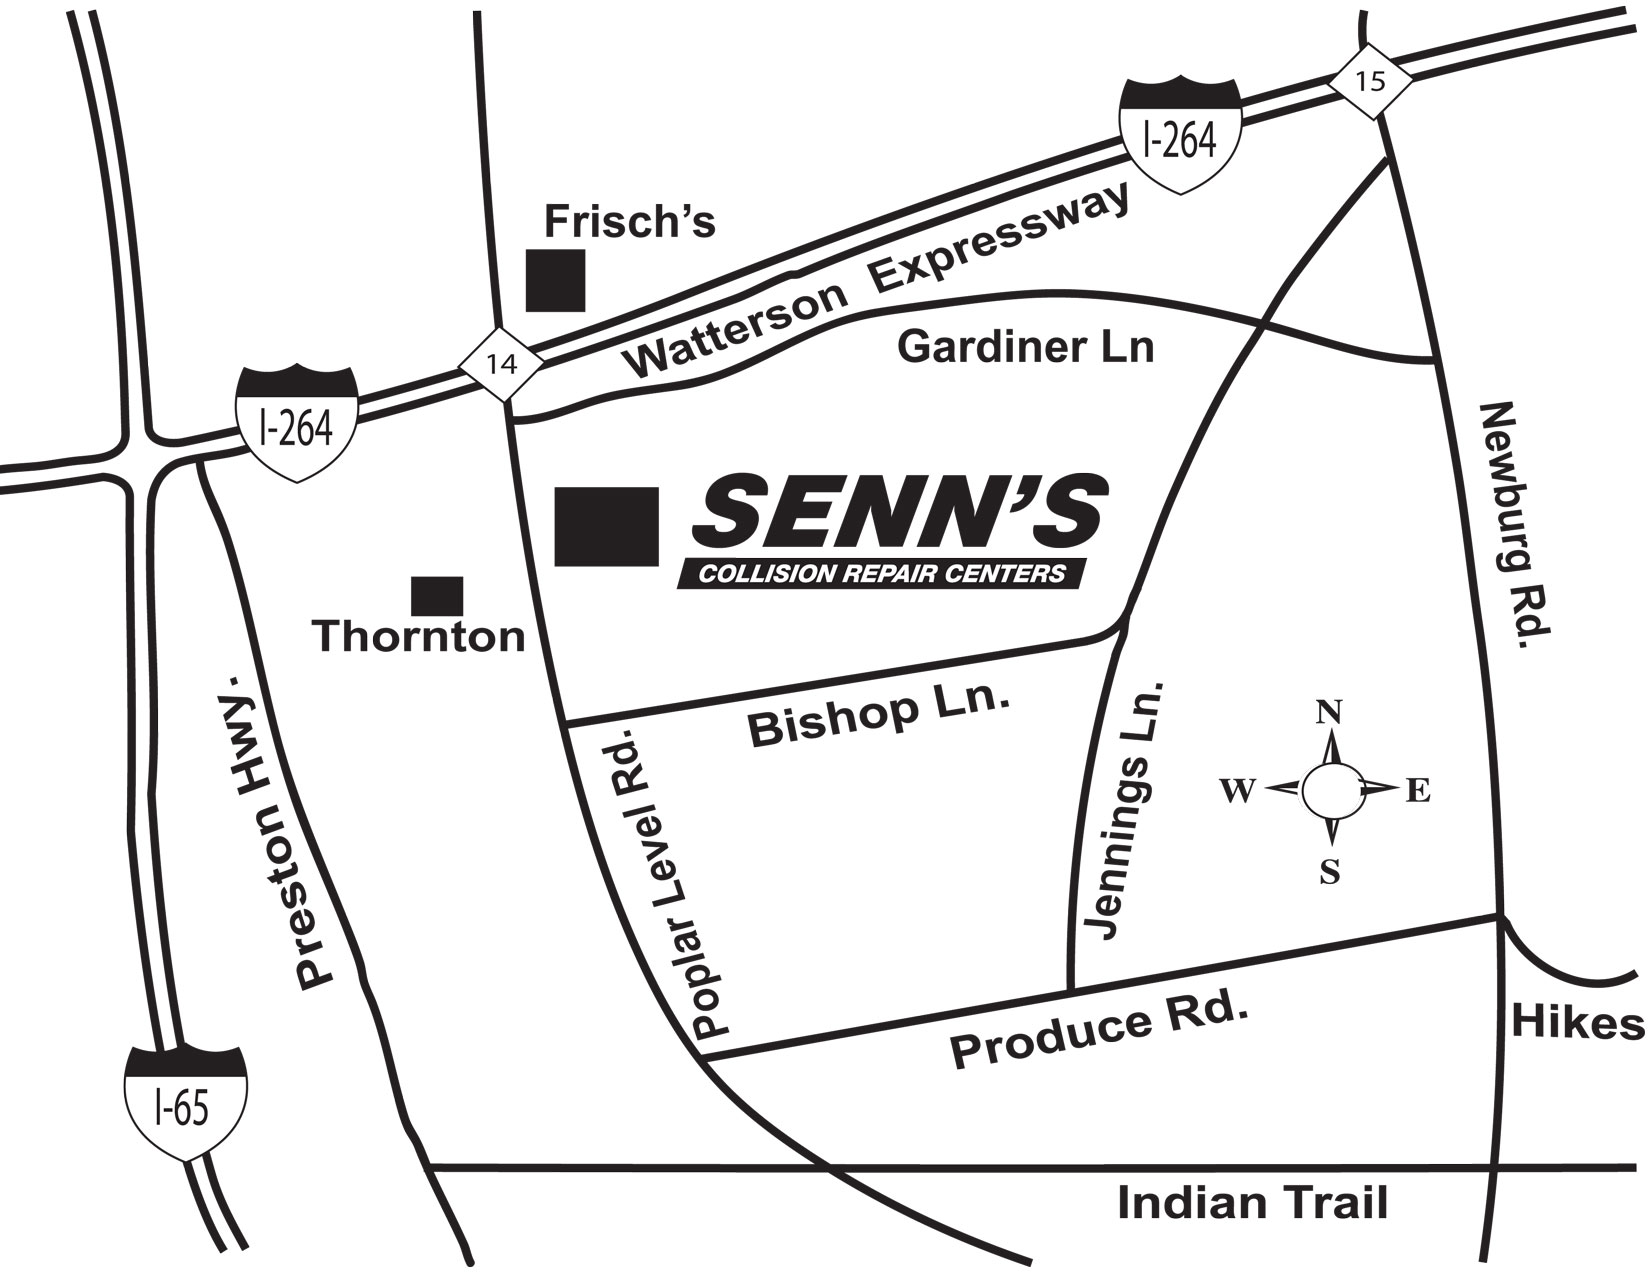 Auto Collision Center by Senn's Map